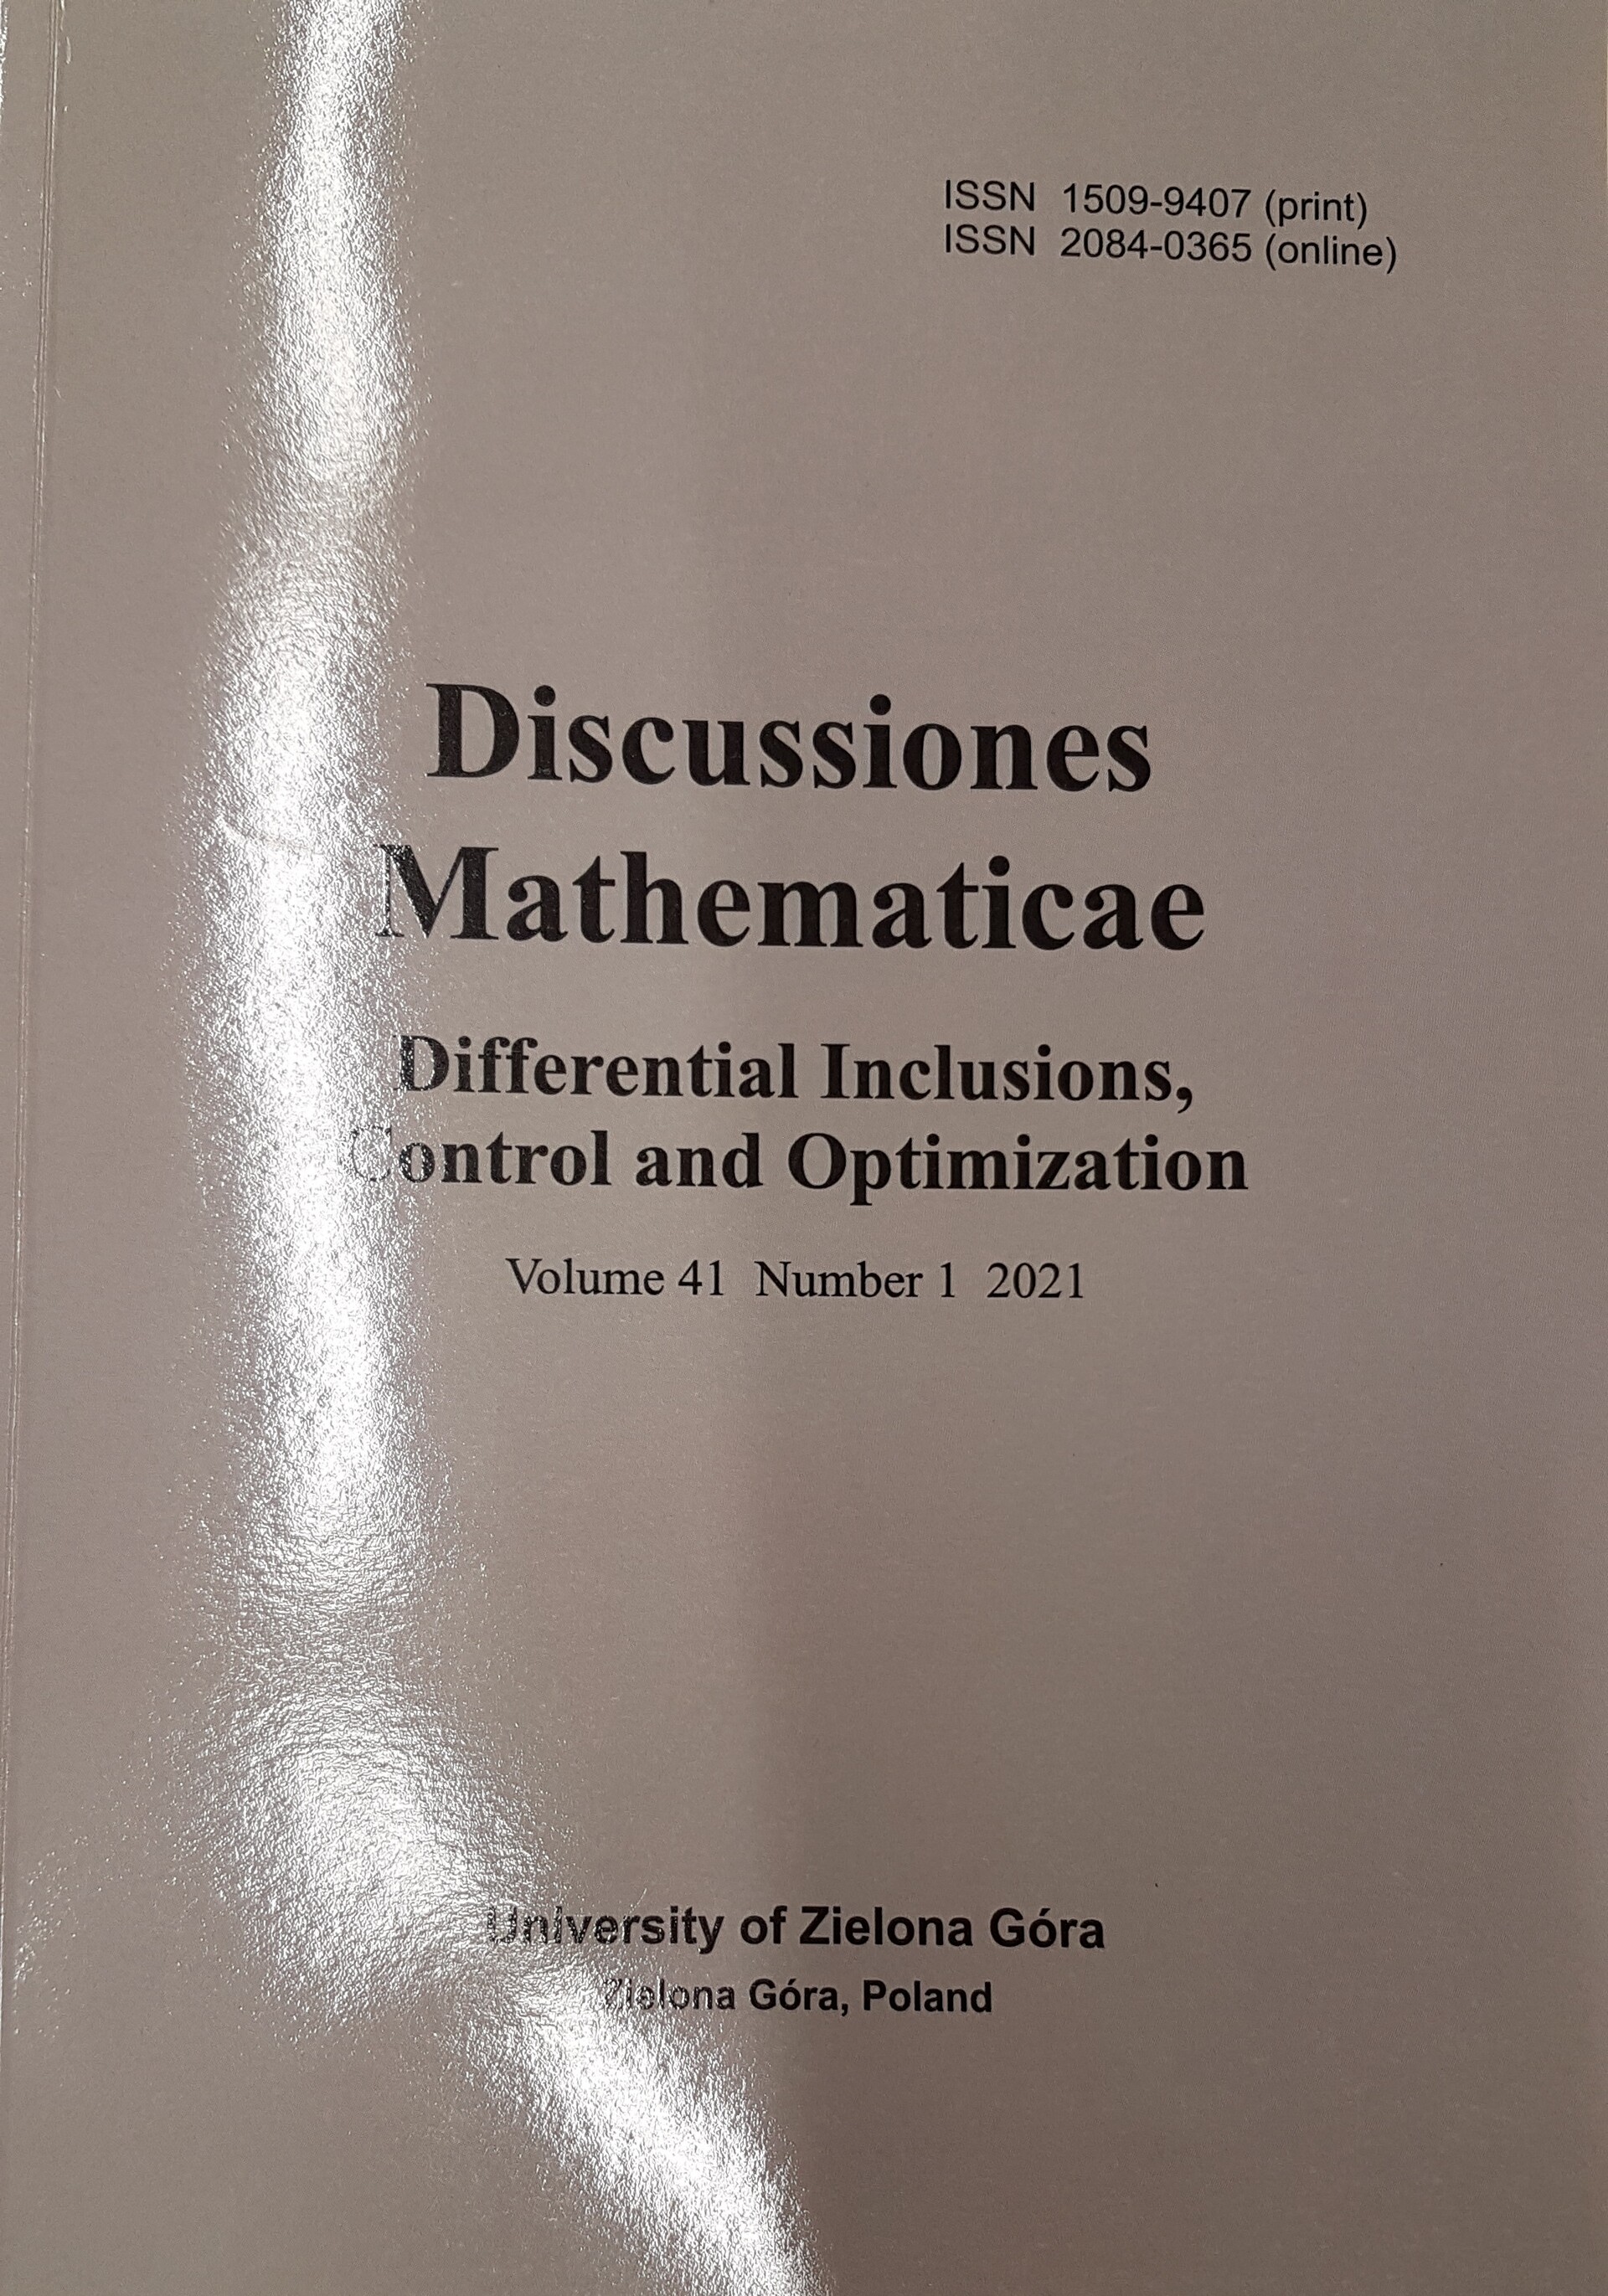 discussiones_mathematicae_differential_incusions_control_and_optimization.jpg